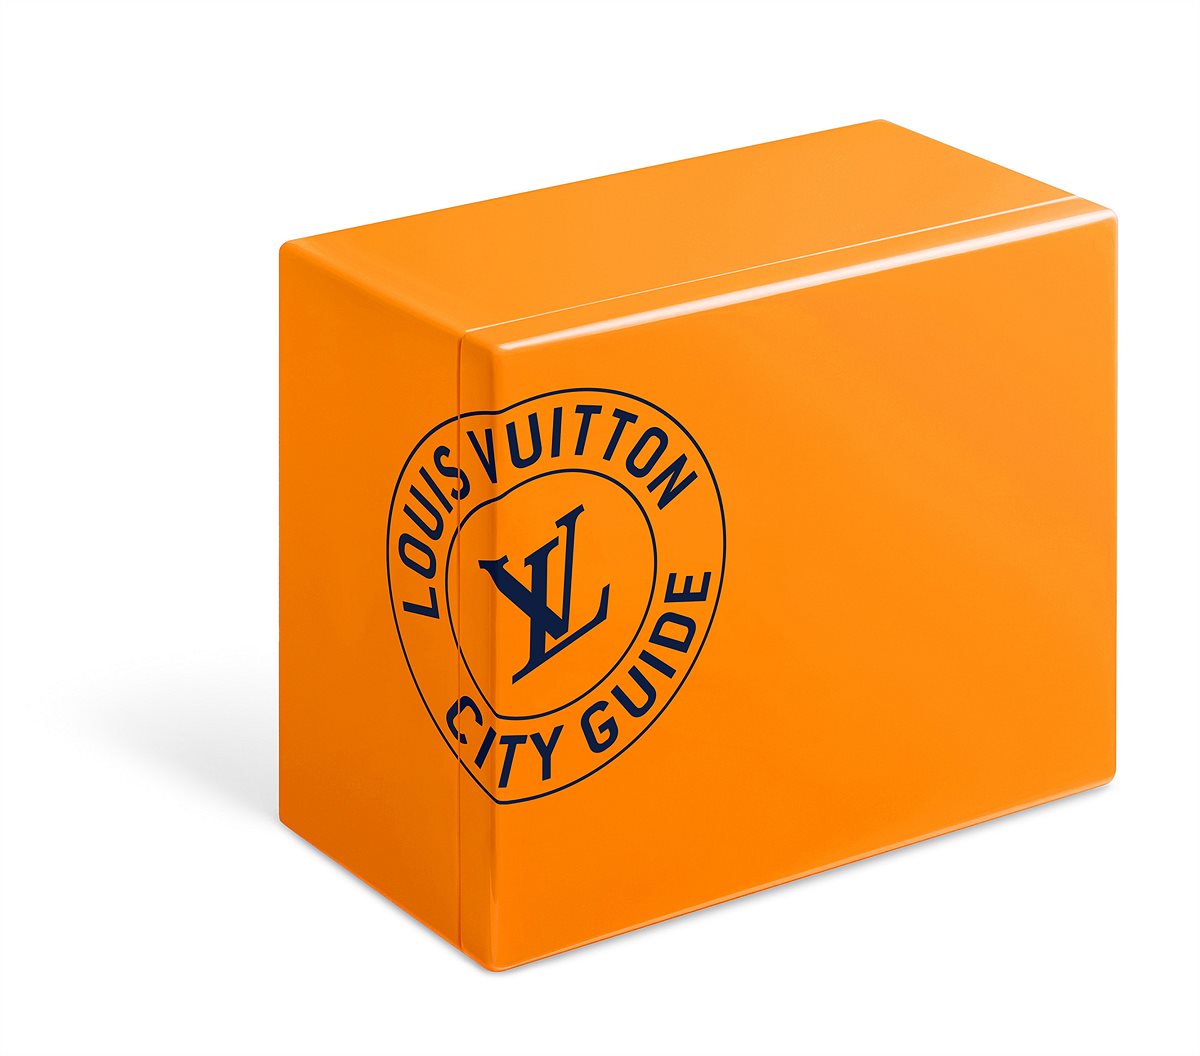 LOUIS VUITTON_City Guide Box Set_EUR 600_Berlin Orange